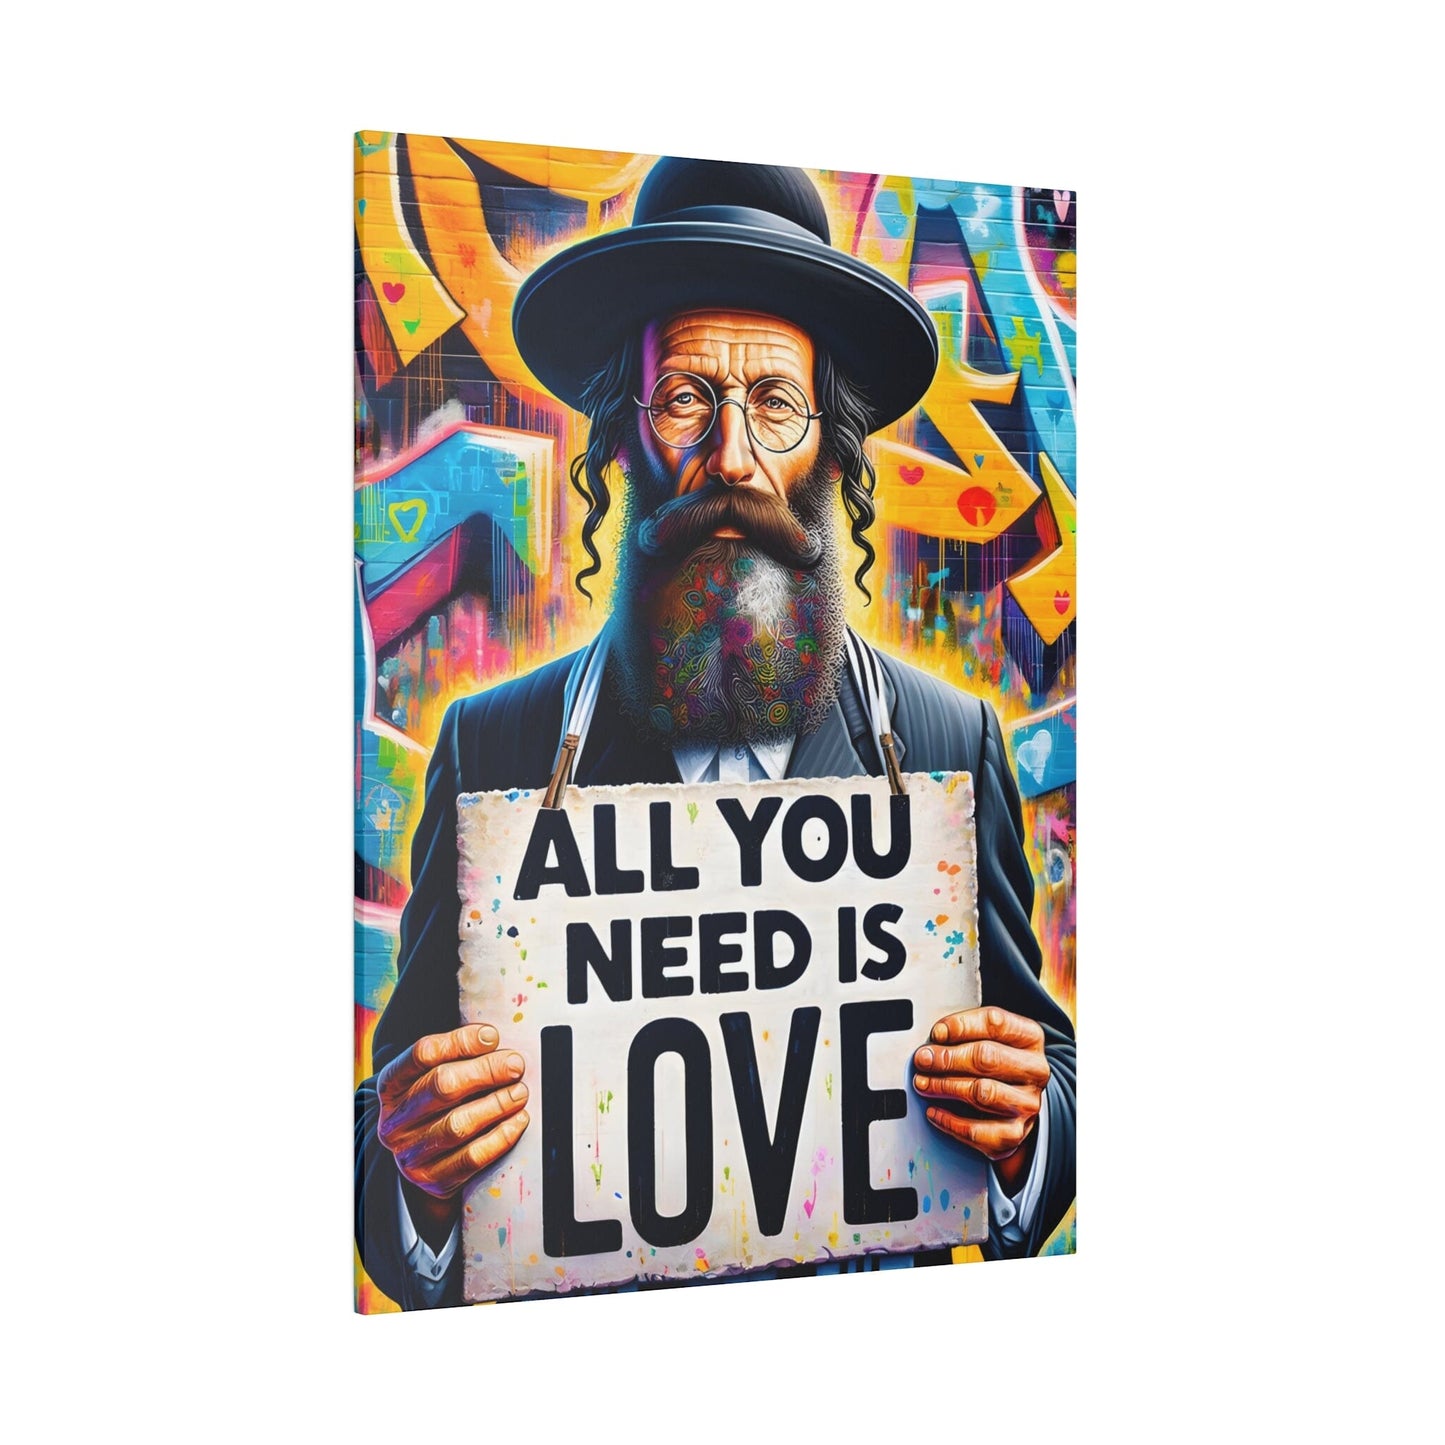 Julian Ardley. Rabbi's Rendition of Romance. Exclusive Graphic Print.